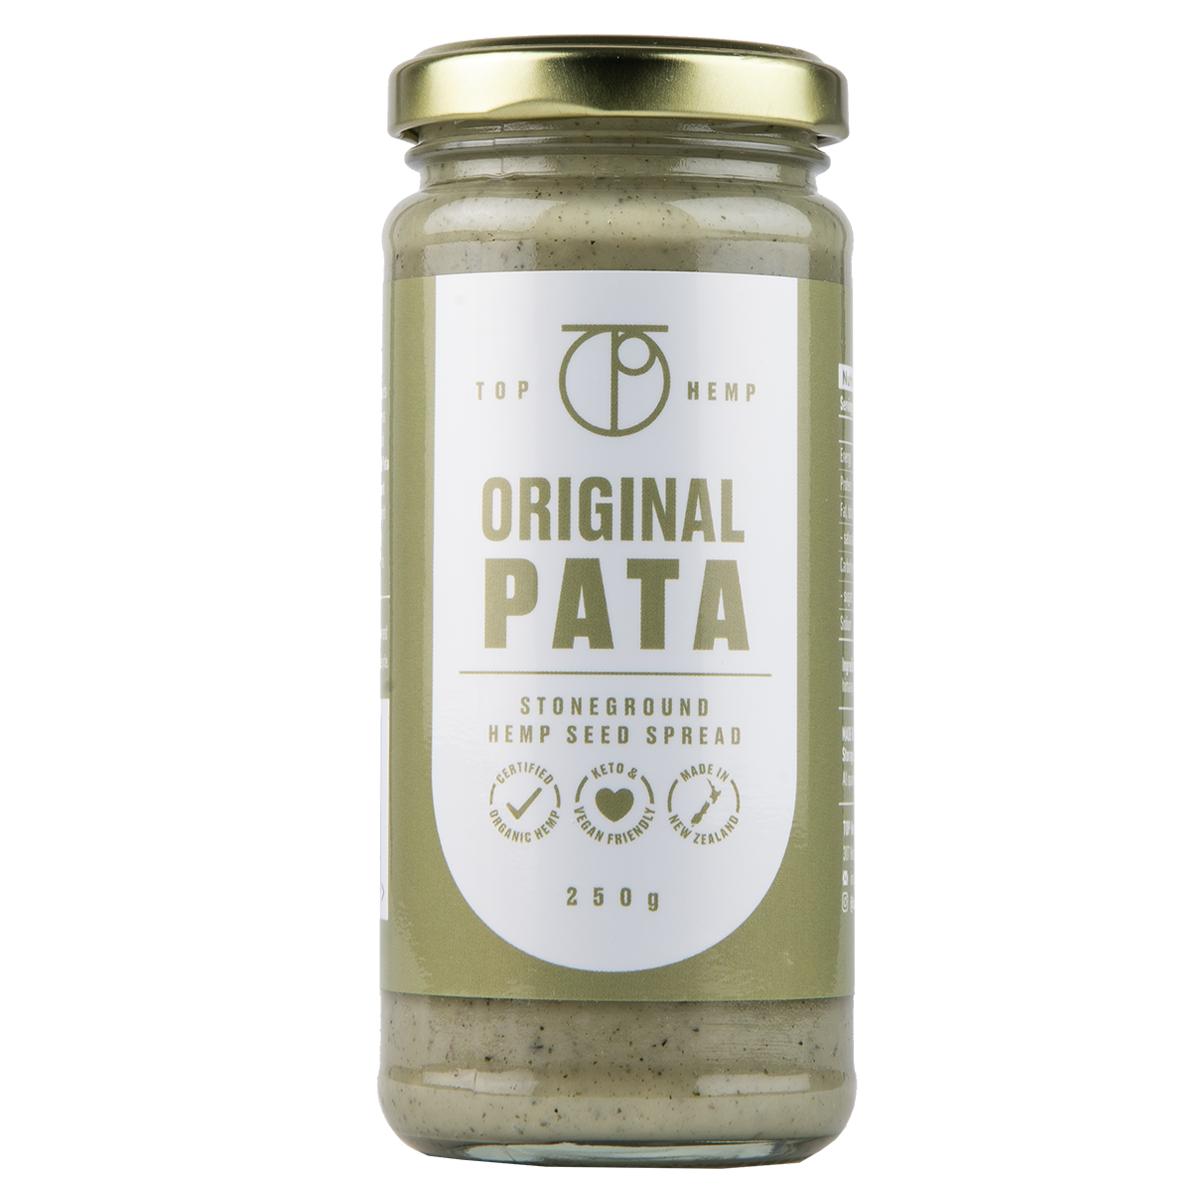 product image for TOP Hemp - Original Pata (stoneground hemp seed spread)